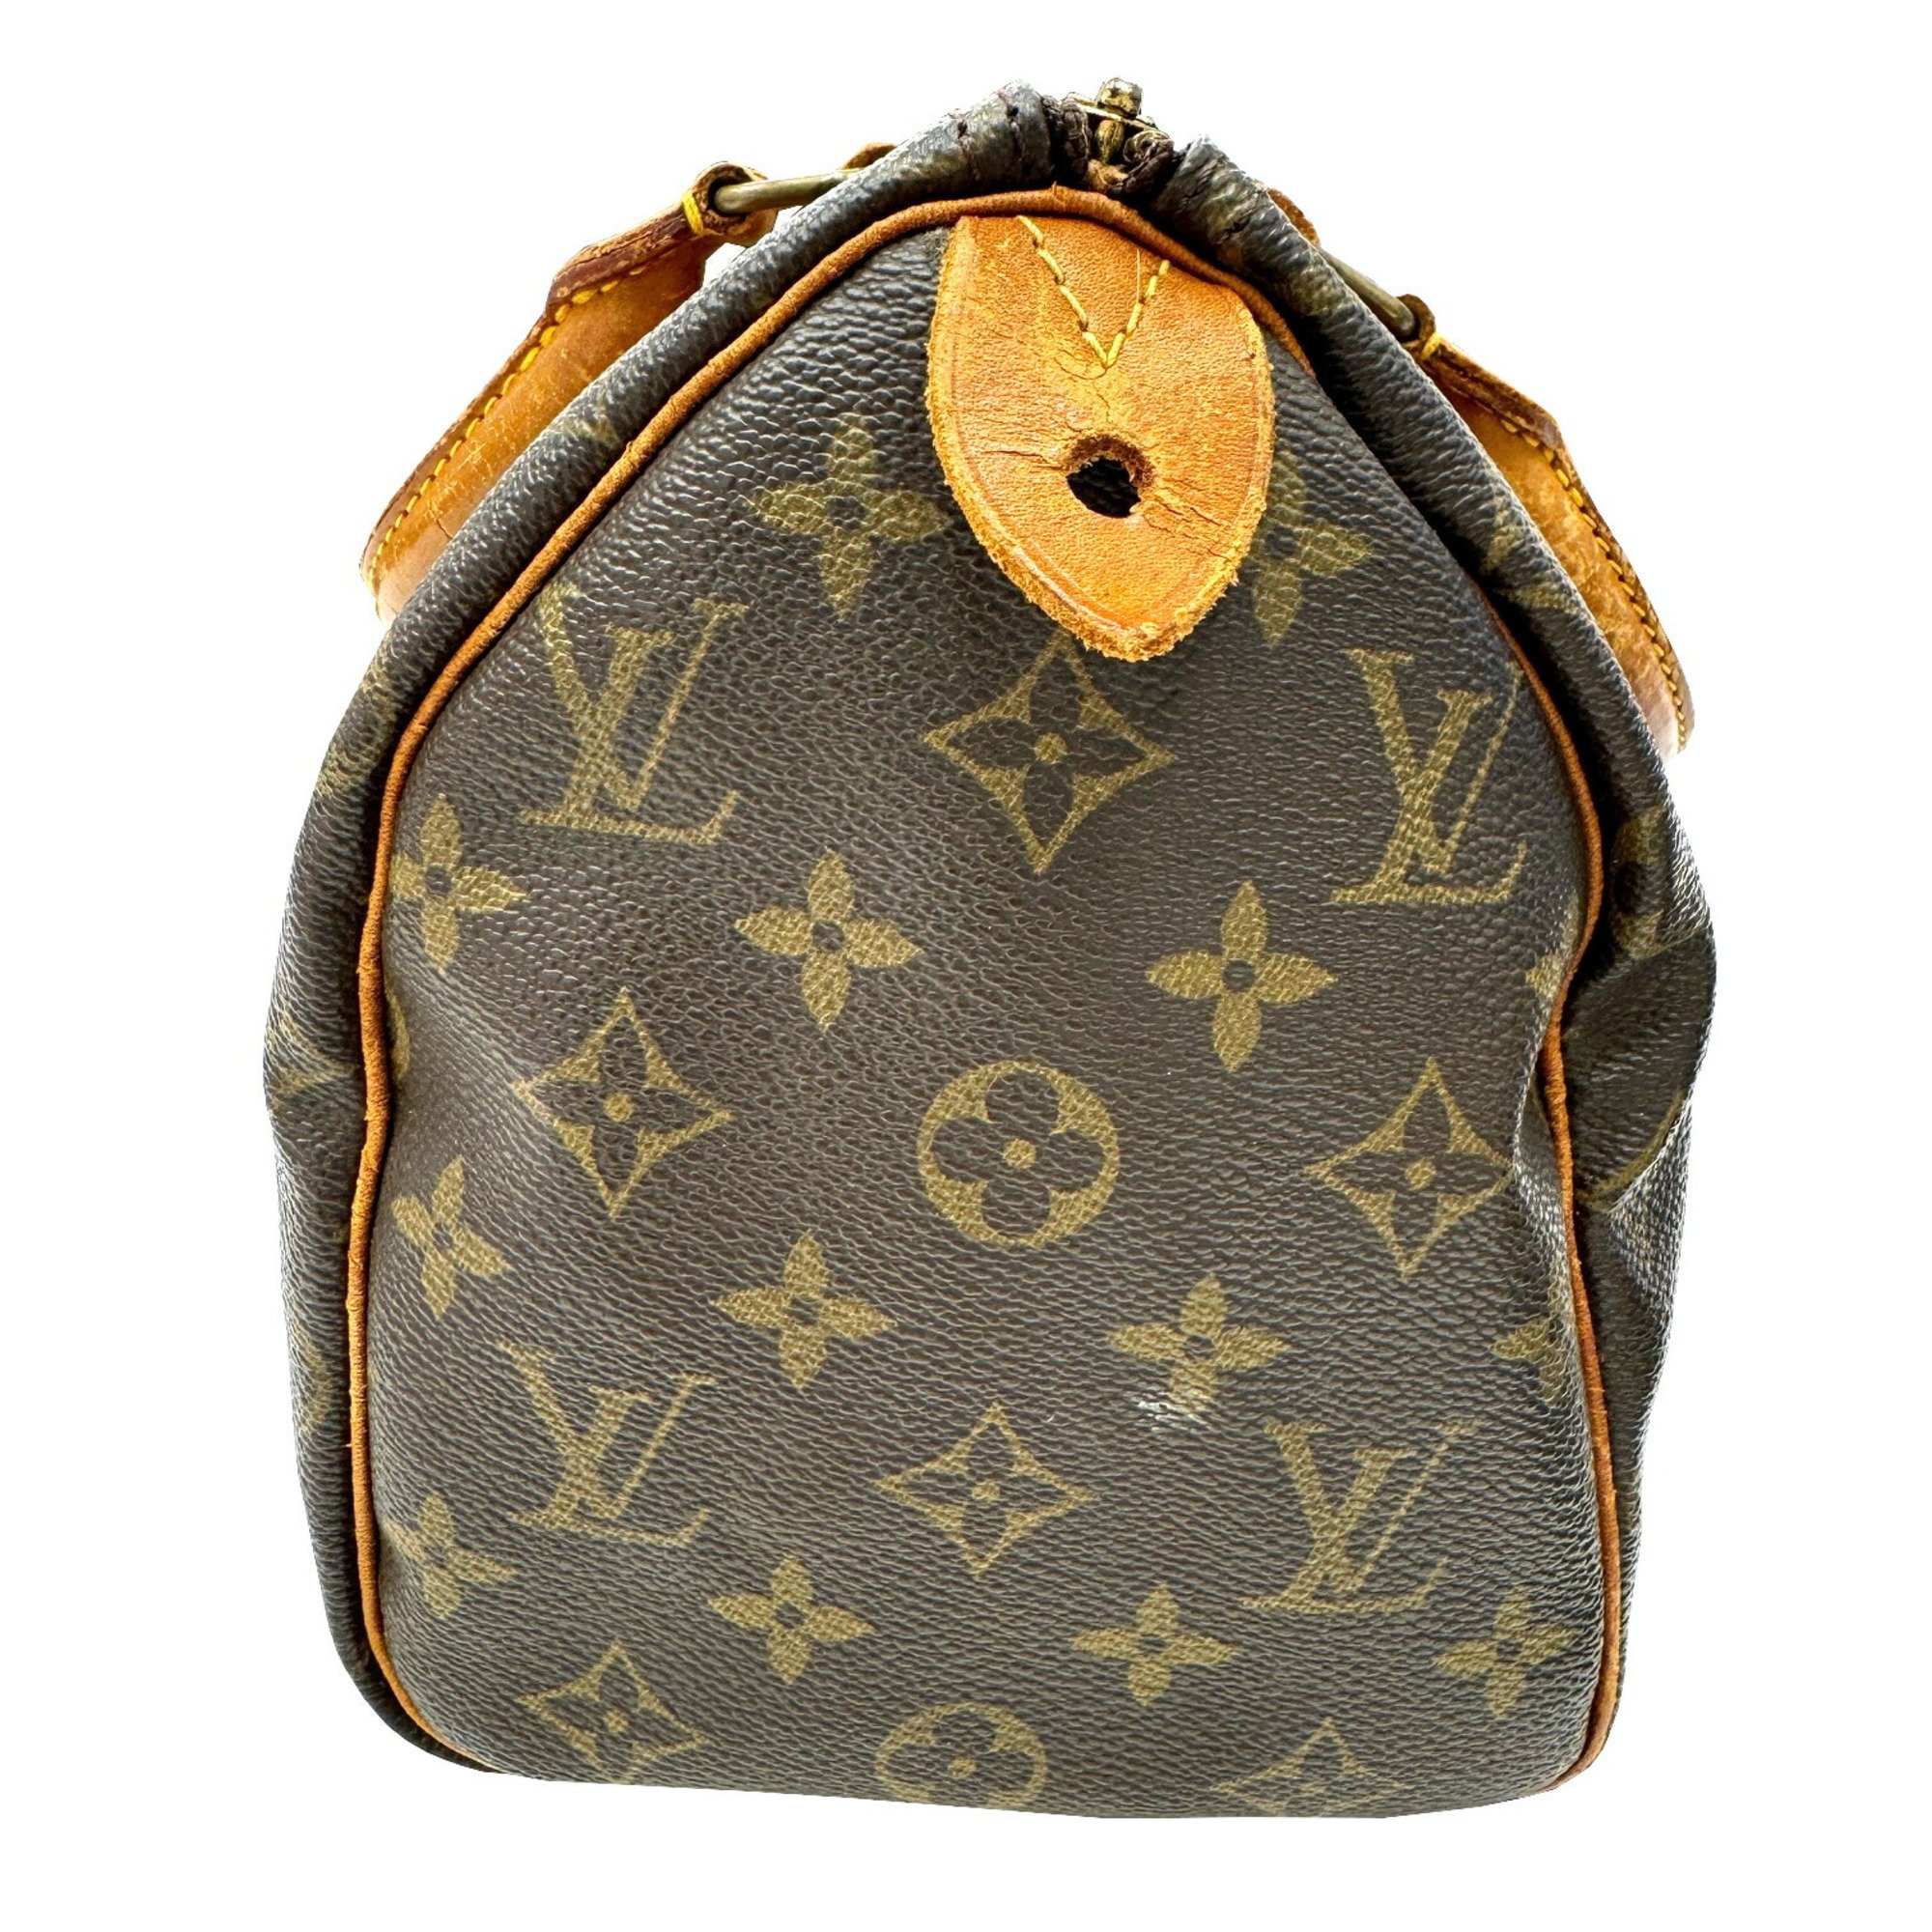 LOUIS VUITTON Louis Vuitton Speedy 25 Monogram M41528 891 Handbag Boston Bag Women's Brown